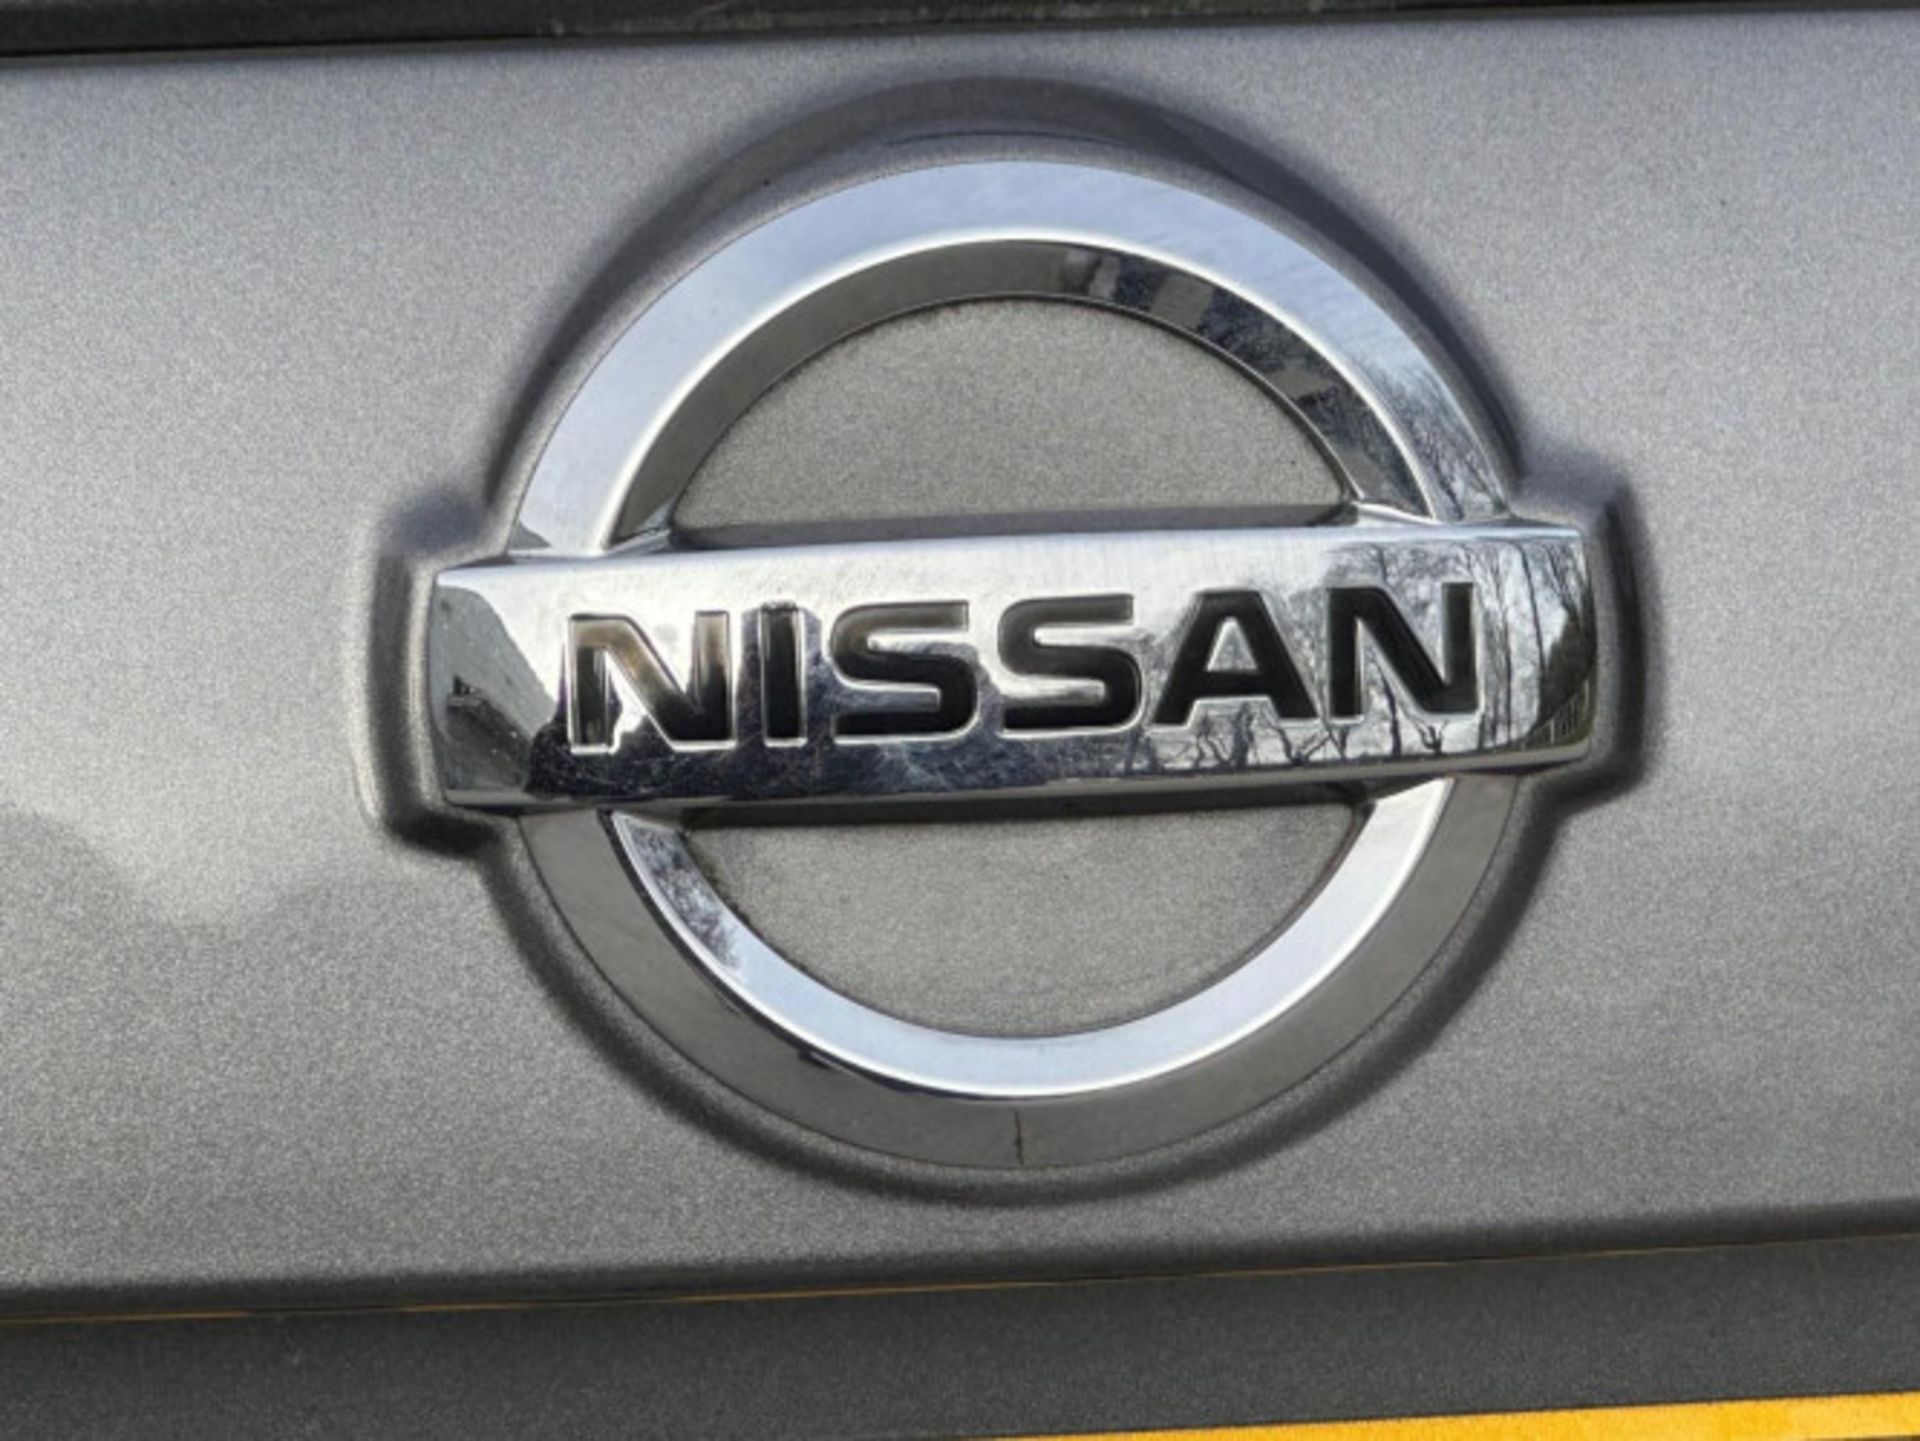 2011 NISSAN JUKE 1.5 DCI ACENTA SPORT 5-DOOR SUV >>--NO VAT ON HAMMER--<< - Image 68 of 112